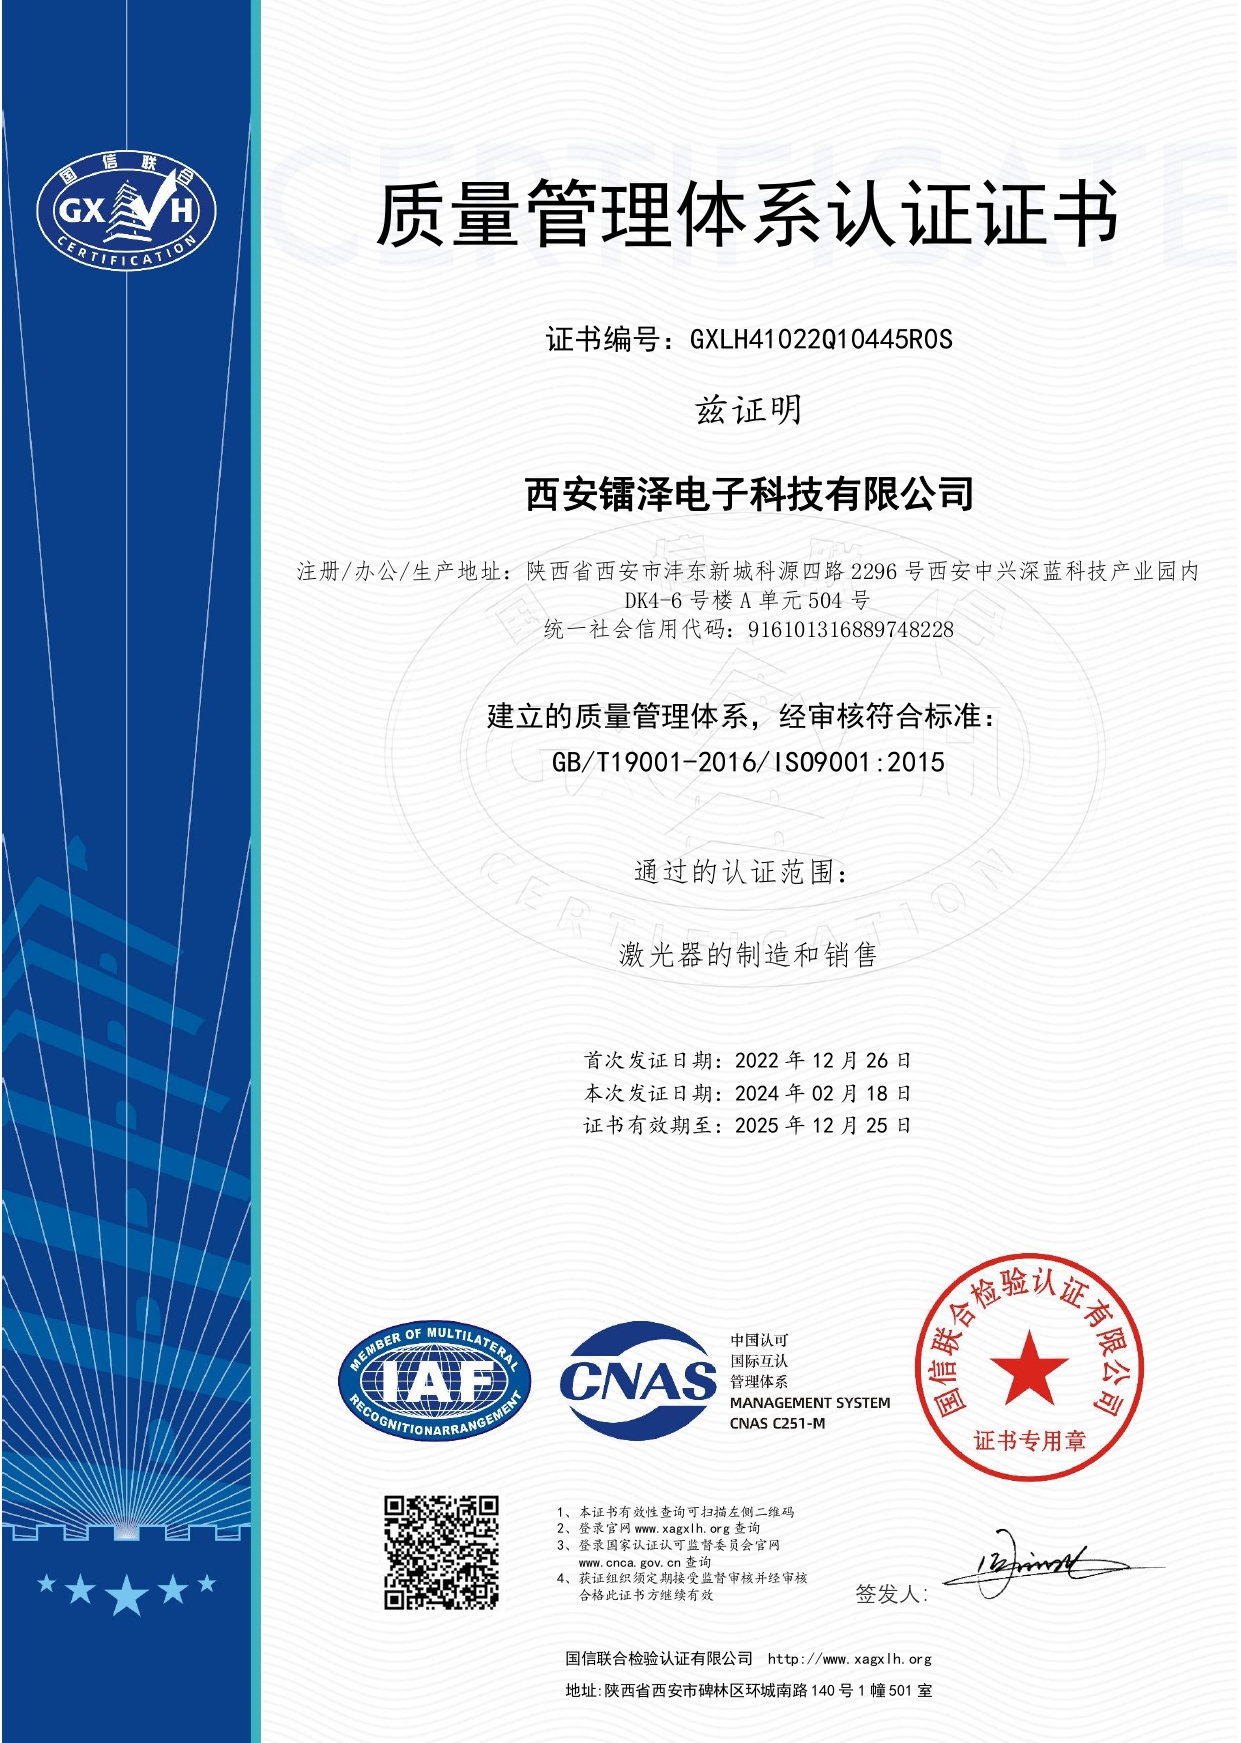 <strong>热烈祝贺公司顺利通过ISO9001:2008质量管理体系认证</strong>